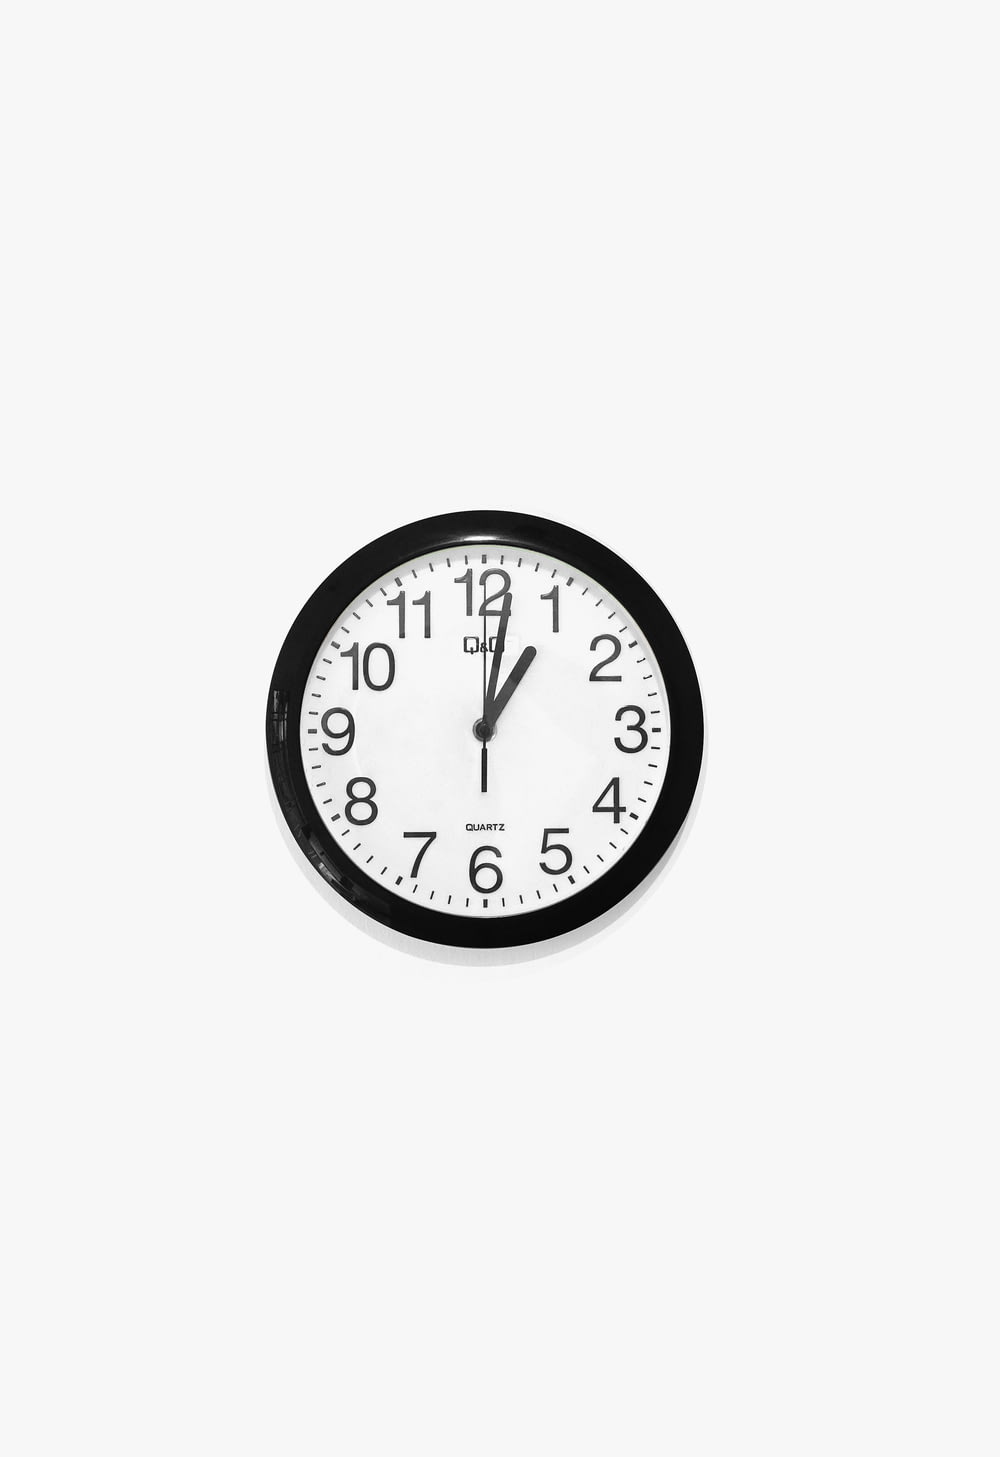 black and white round analog wall clock at 10 10